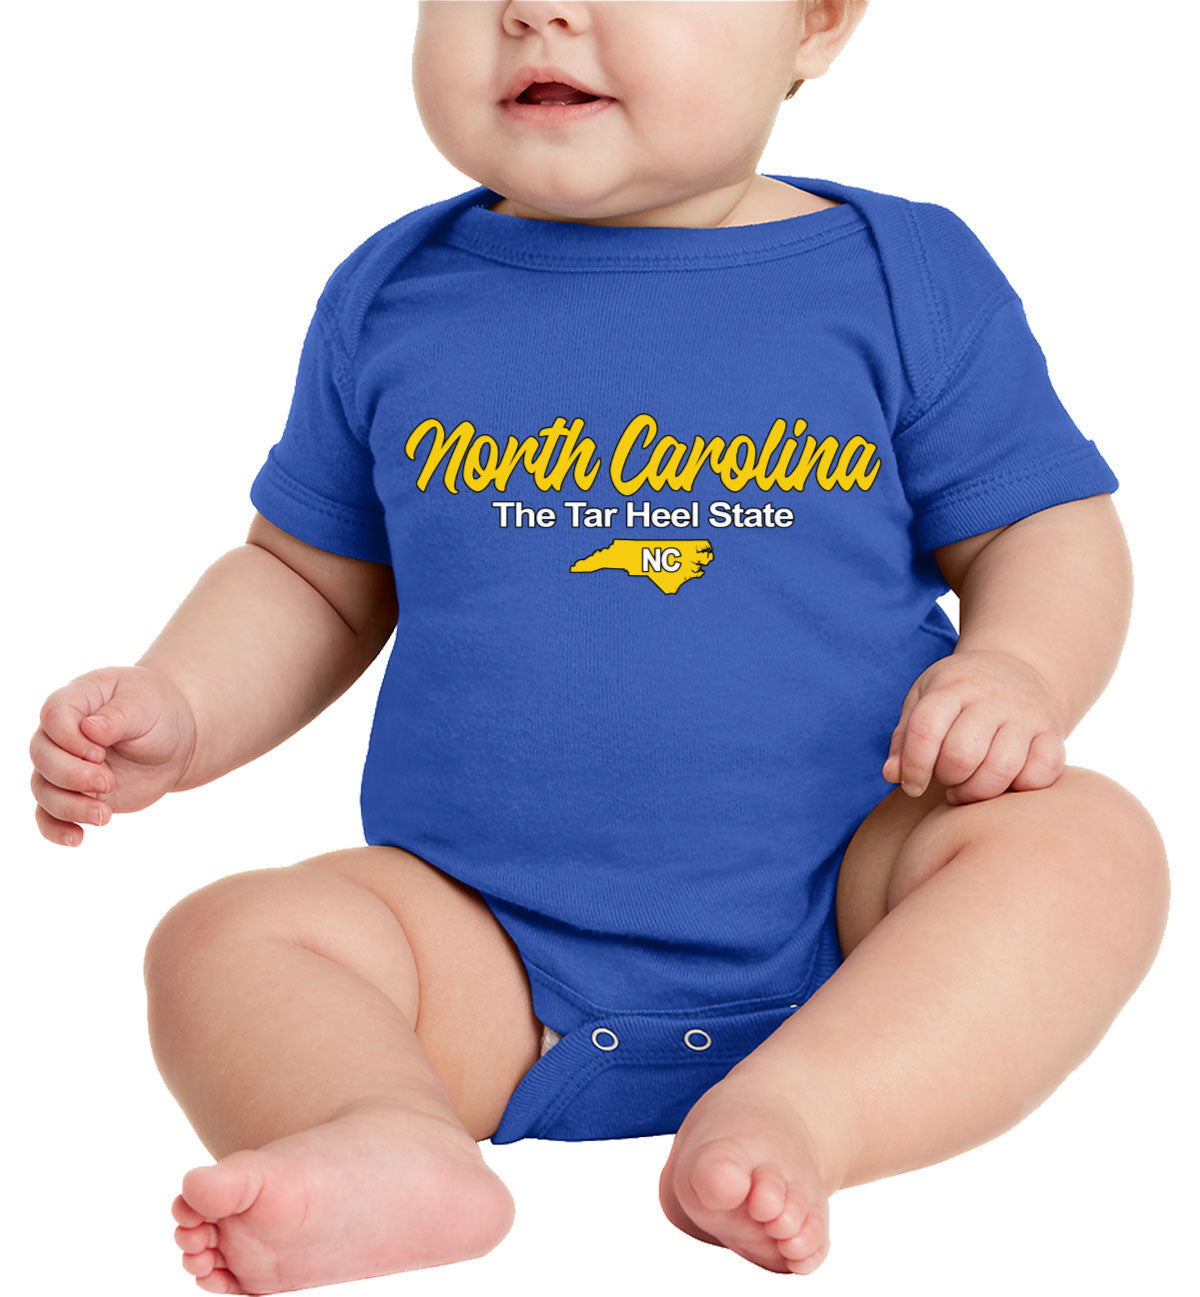 North Carolina The Tar Heel State Baby Onesie